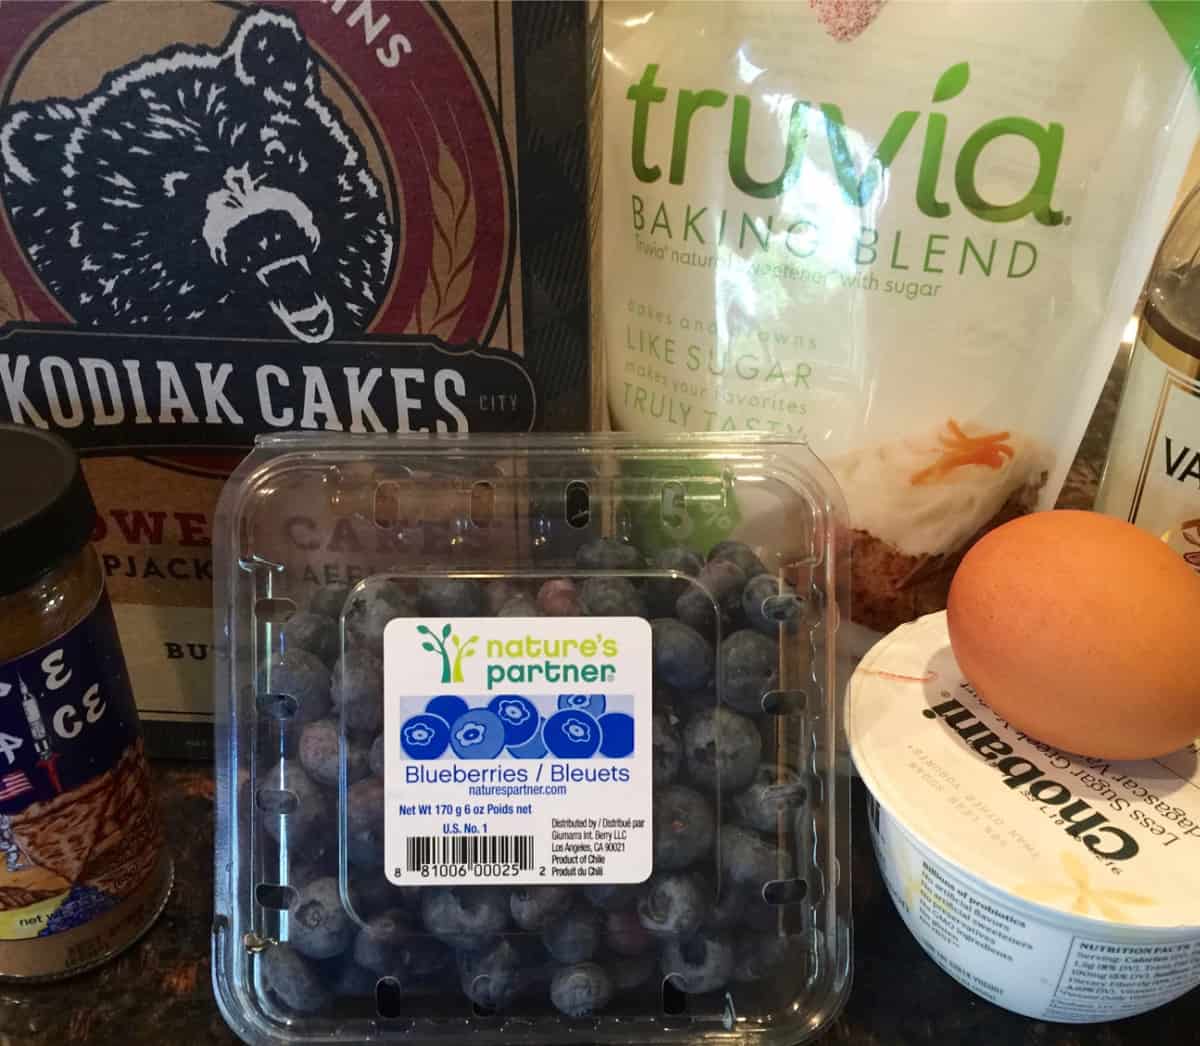 Kodiak cakes mix, Truvia baking blend, blueberries, yogurt, egg and spices.